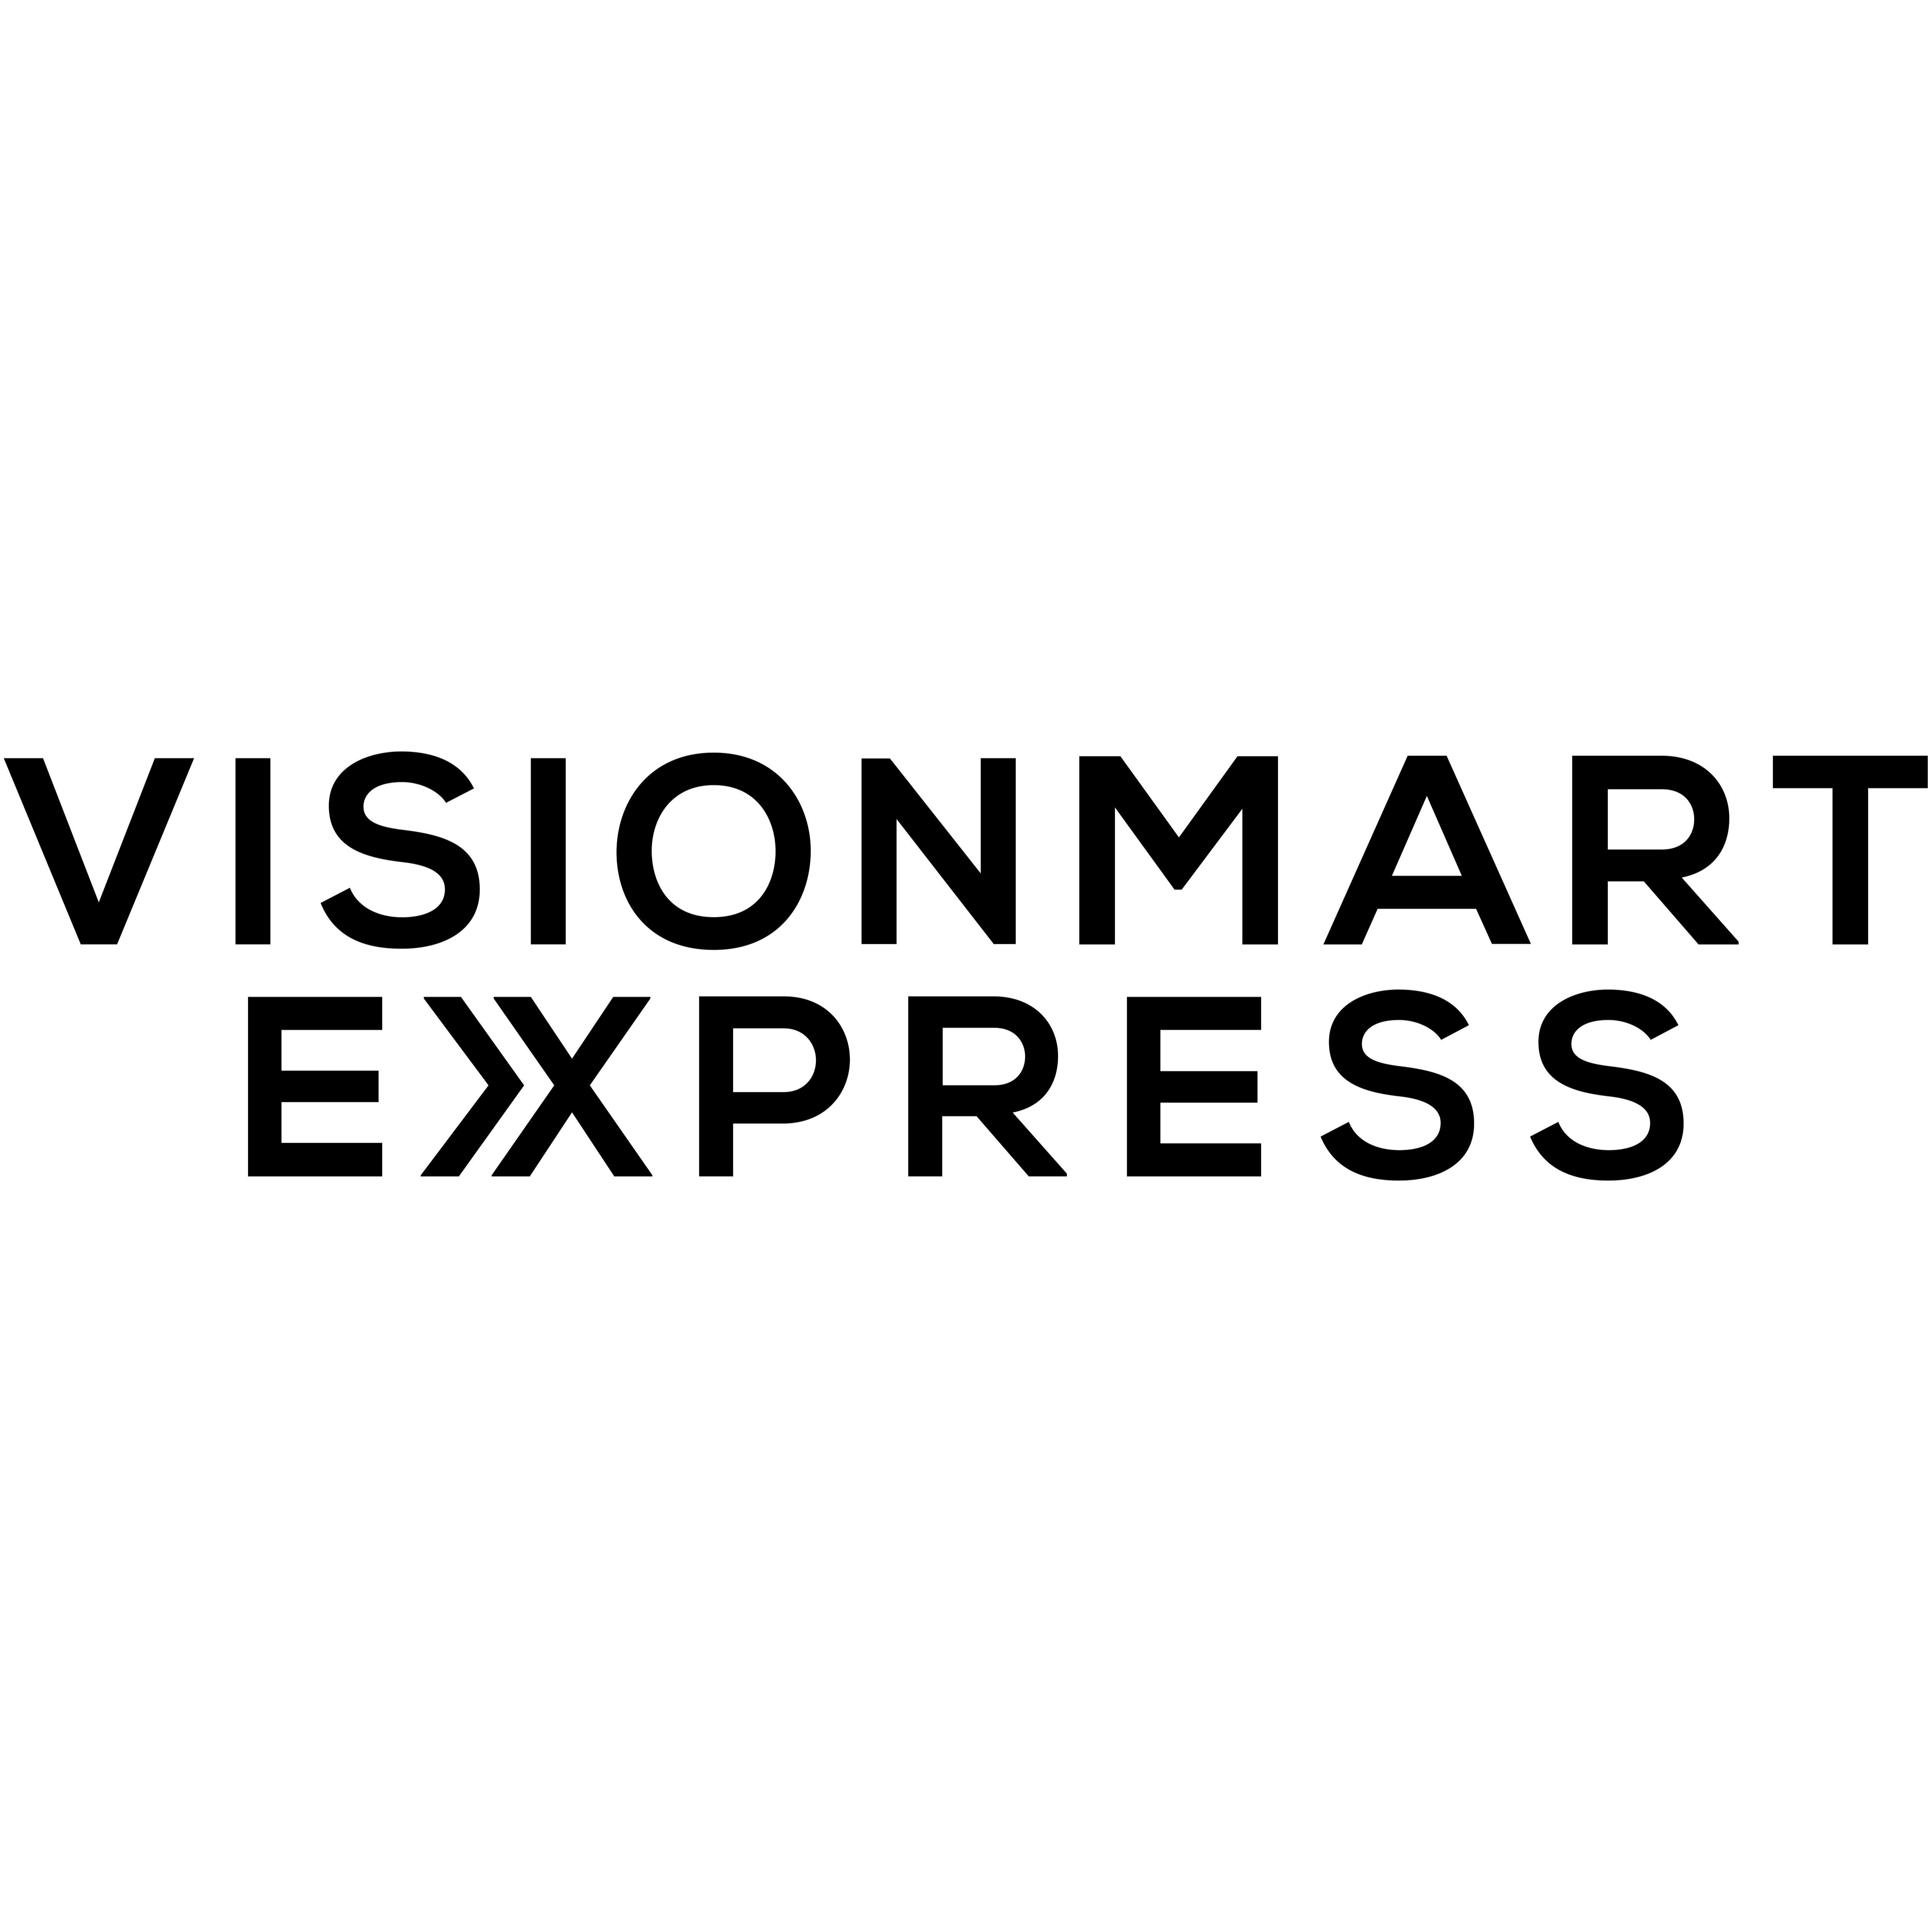 Visionmart Express